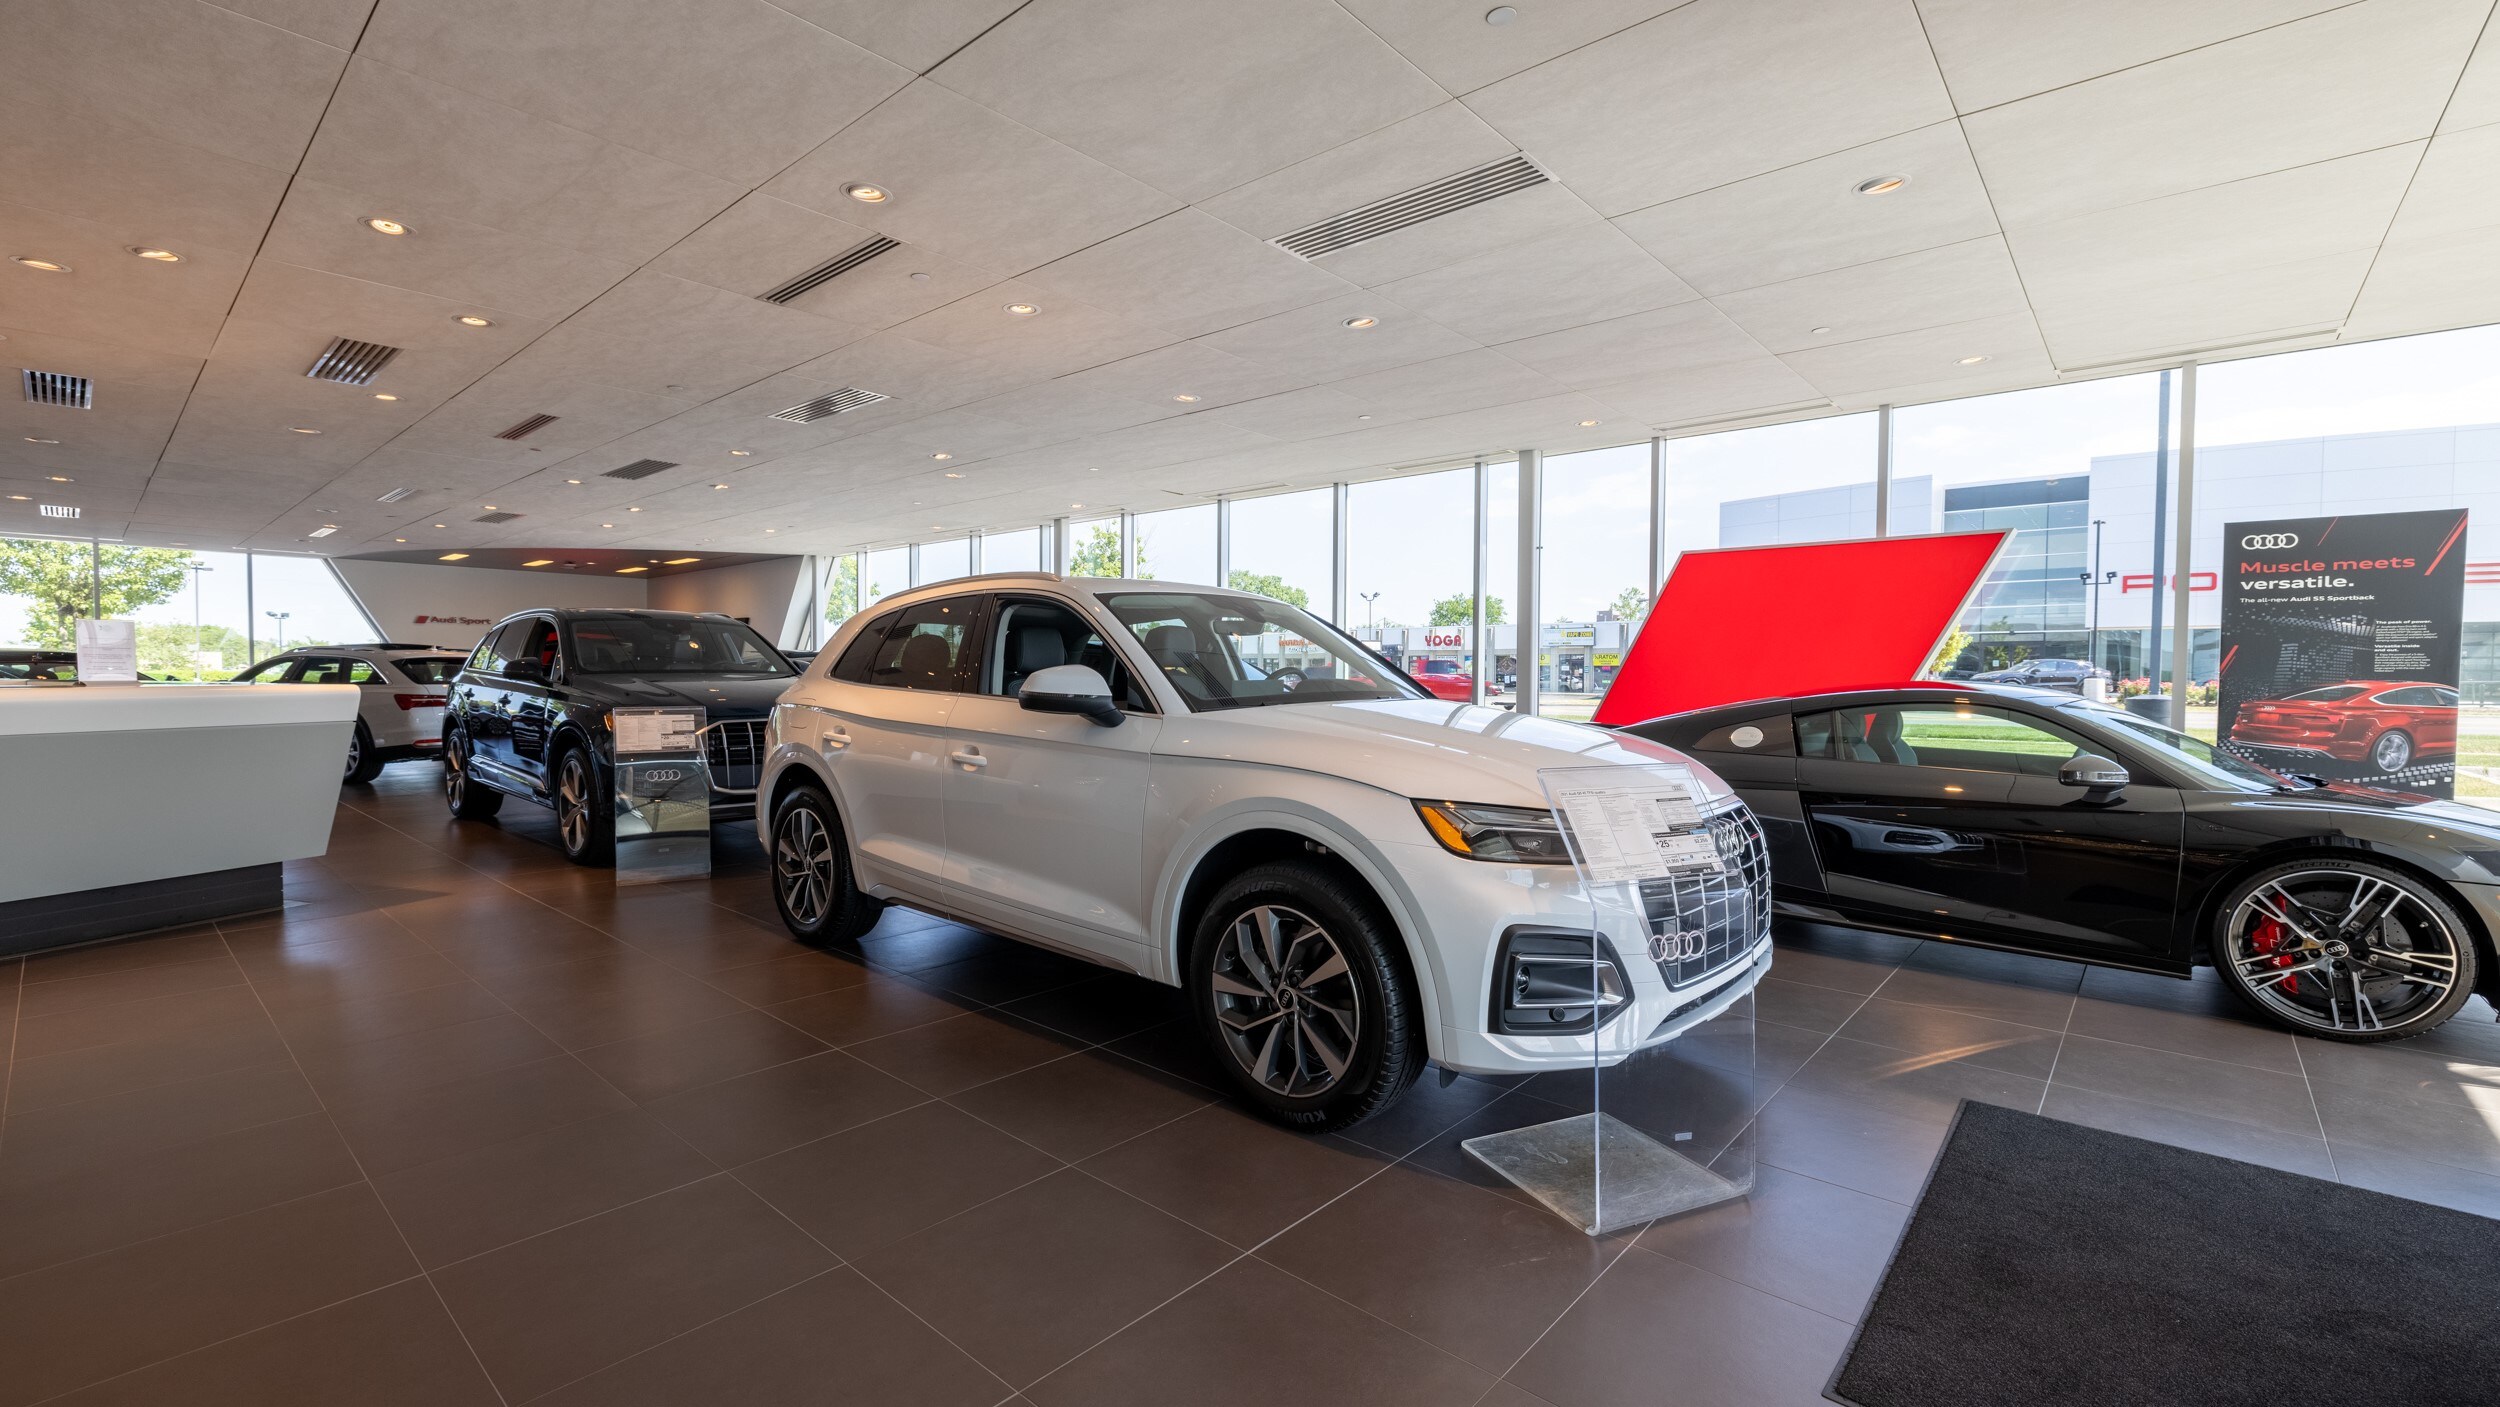 Autonation Audi interior with white Audi car parked inside